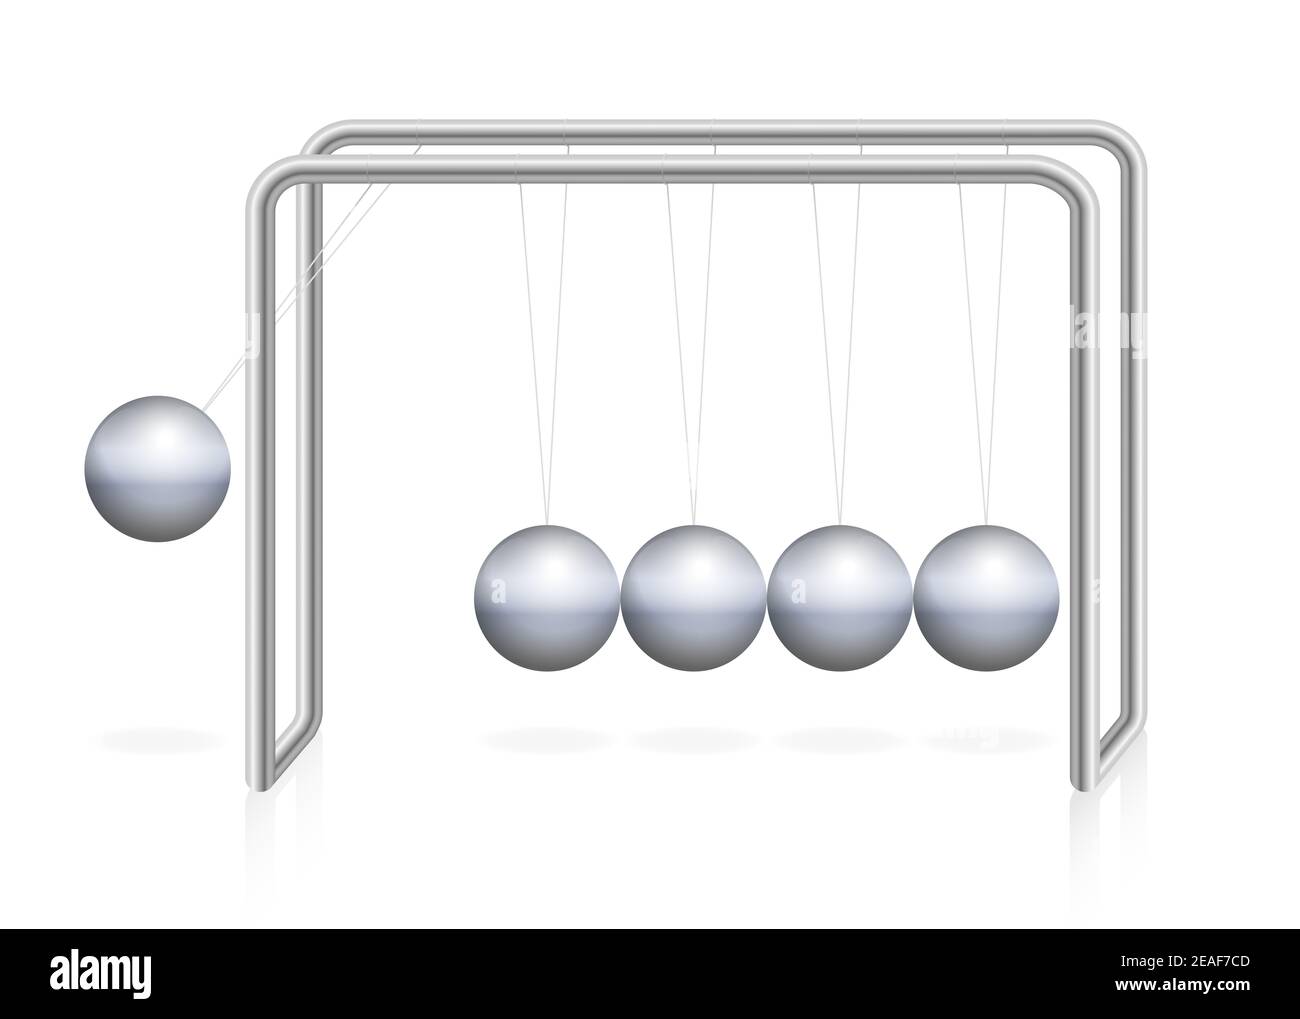 Newtons cradle pendulum with iron ball in motion, momentum, energy. Physical experiment - illustration on white background. Stock Photo